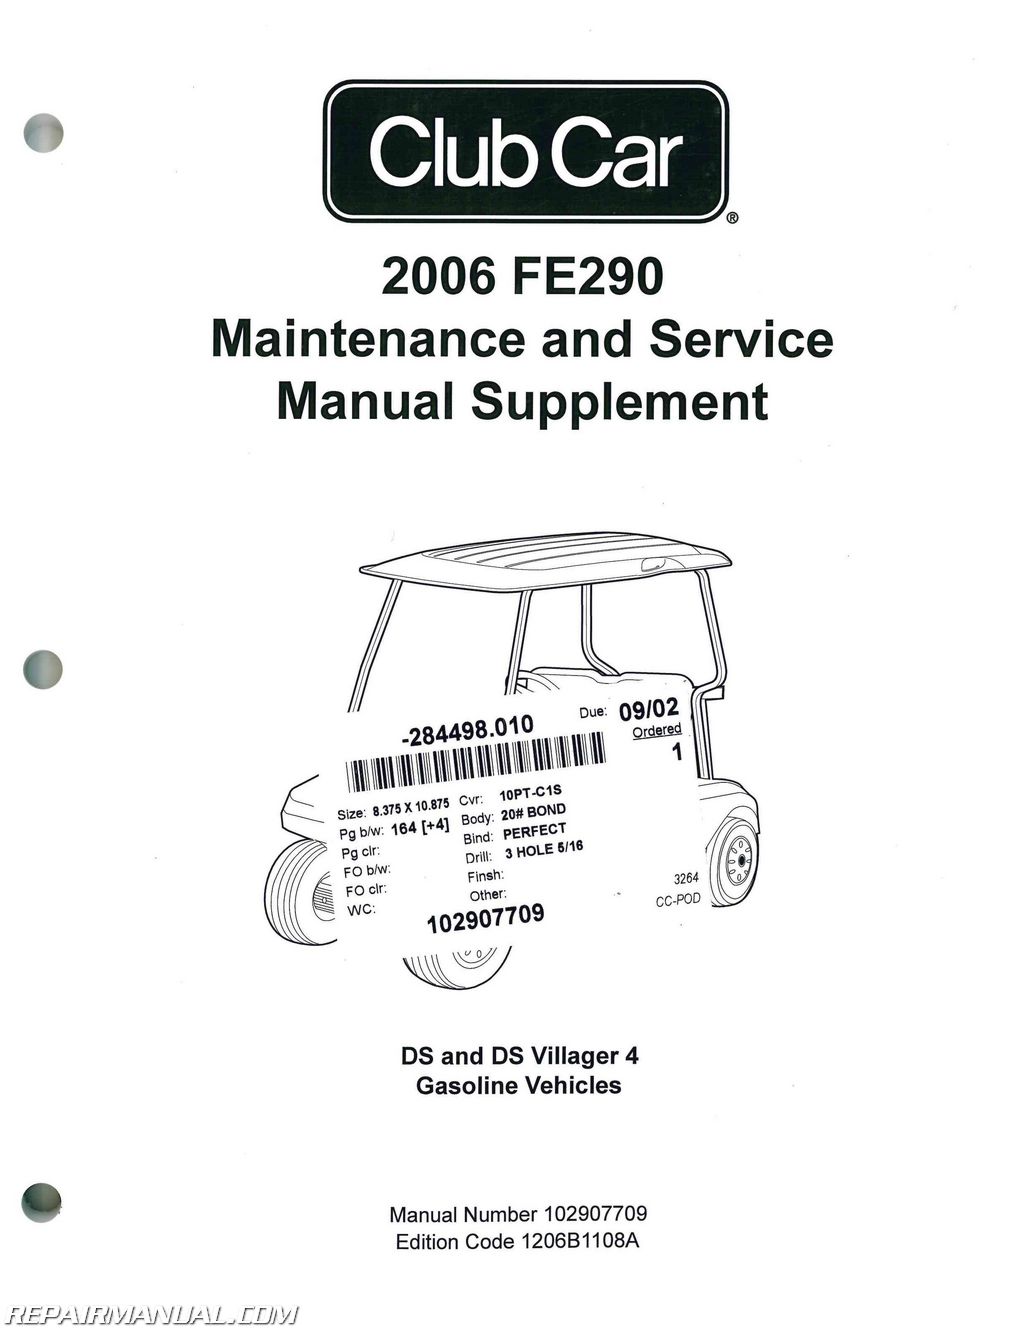 2006 Club Car FE290 Gasoline Service Manual Supplement